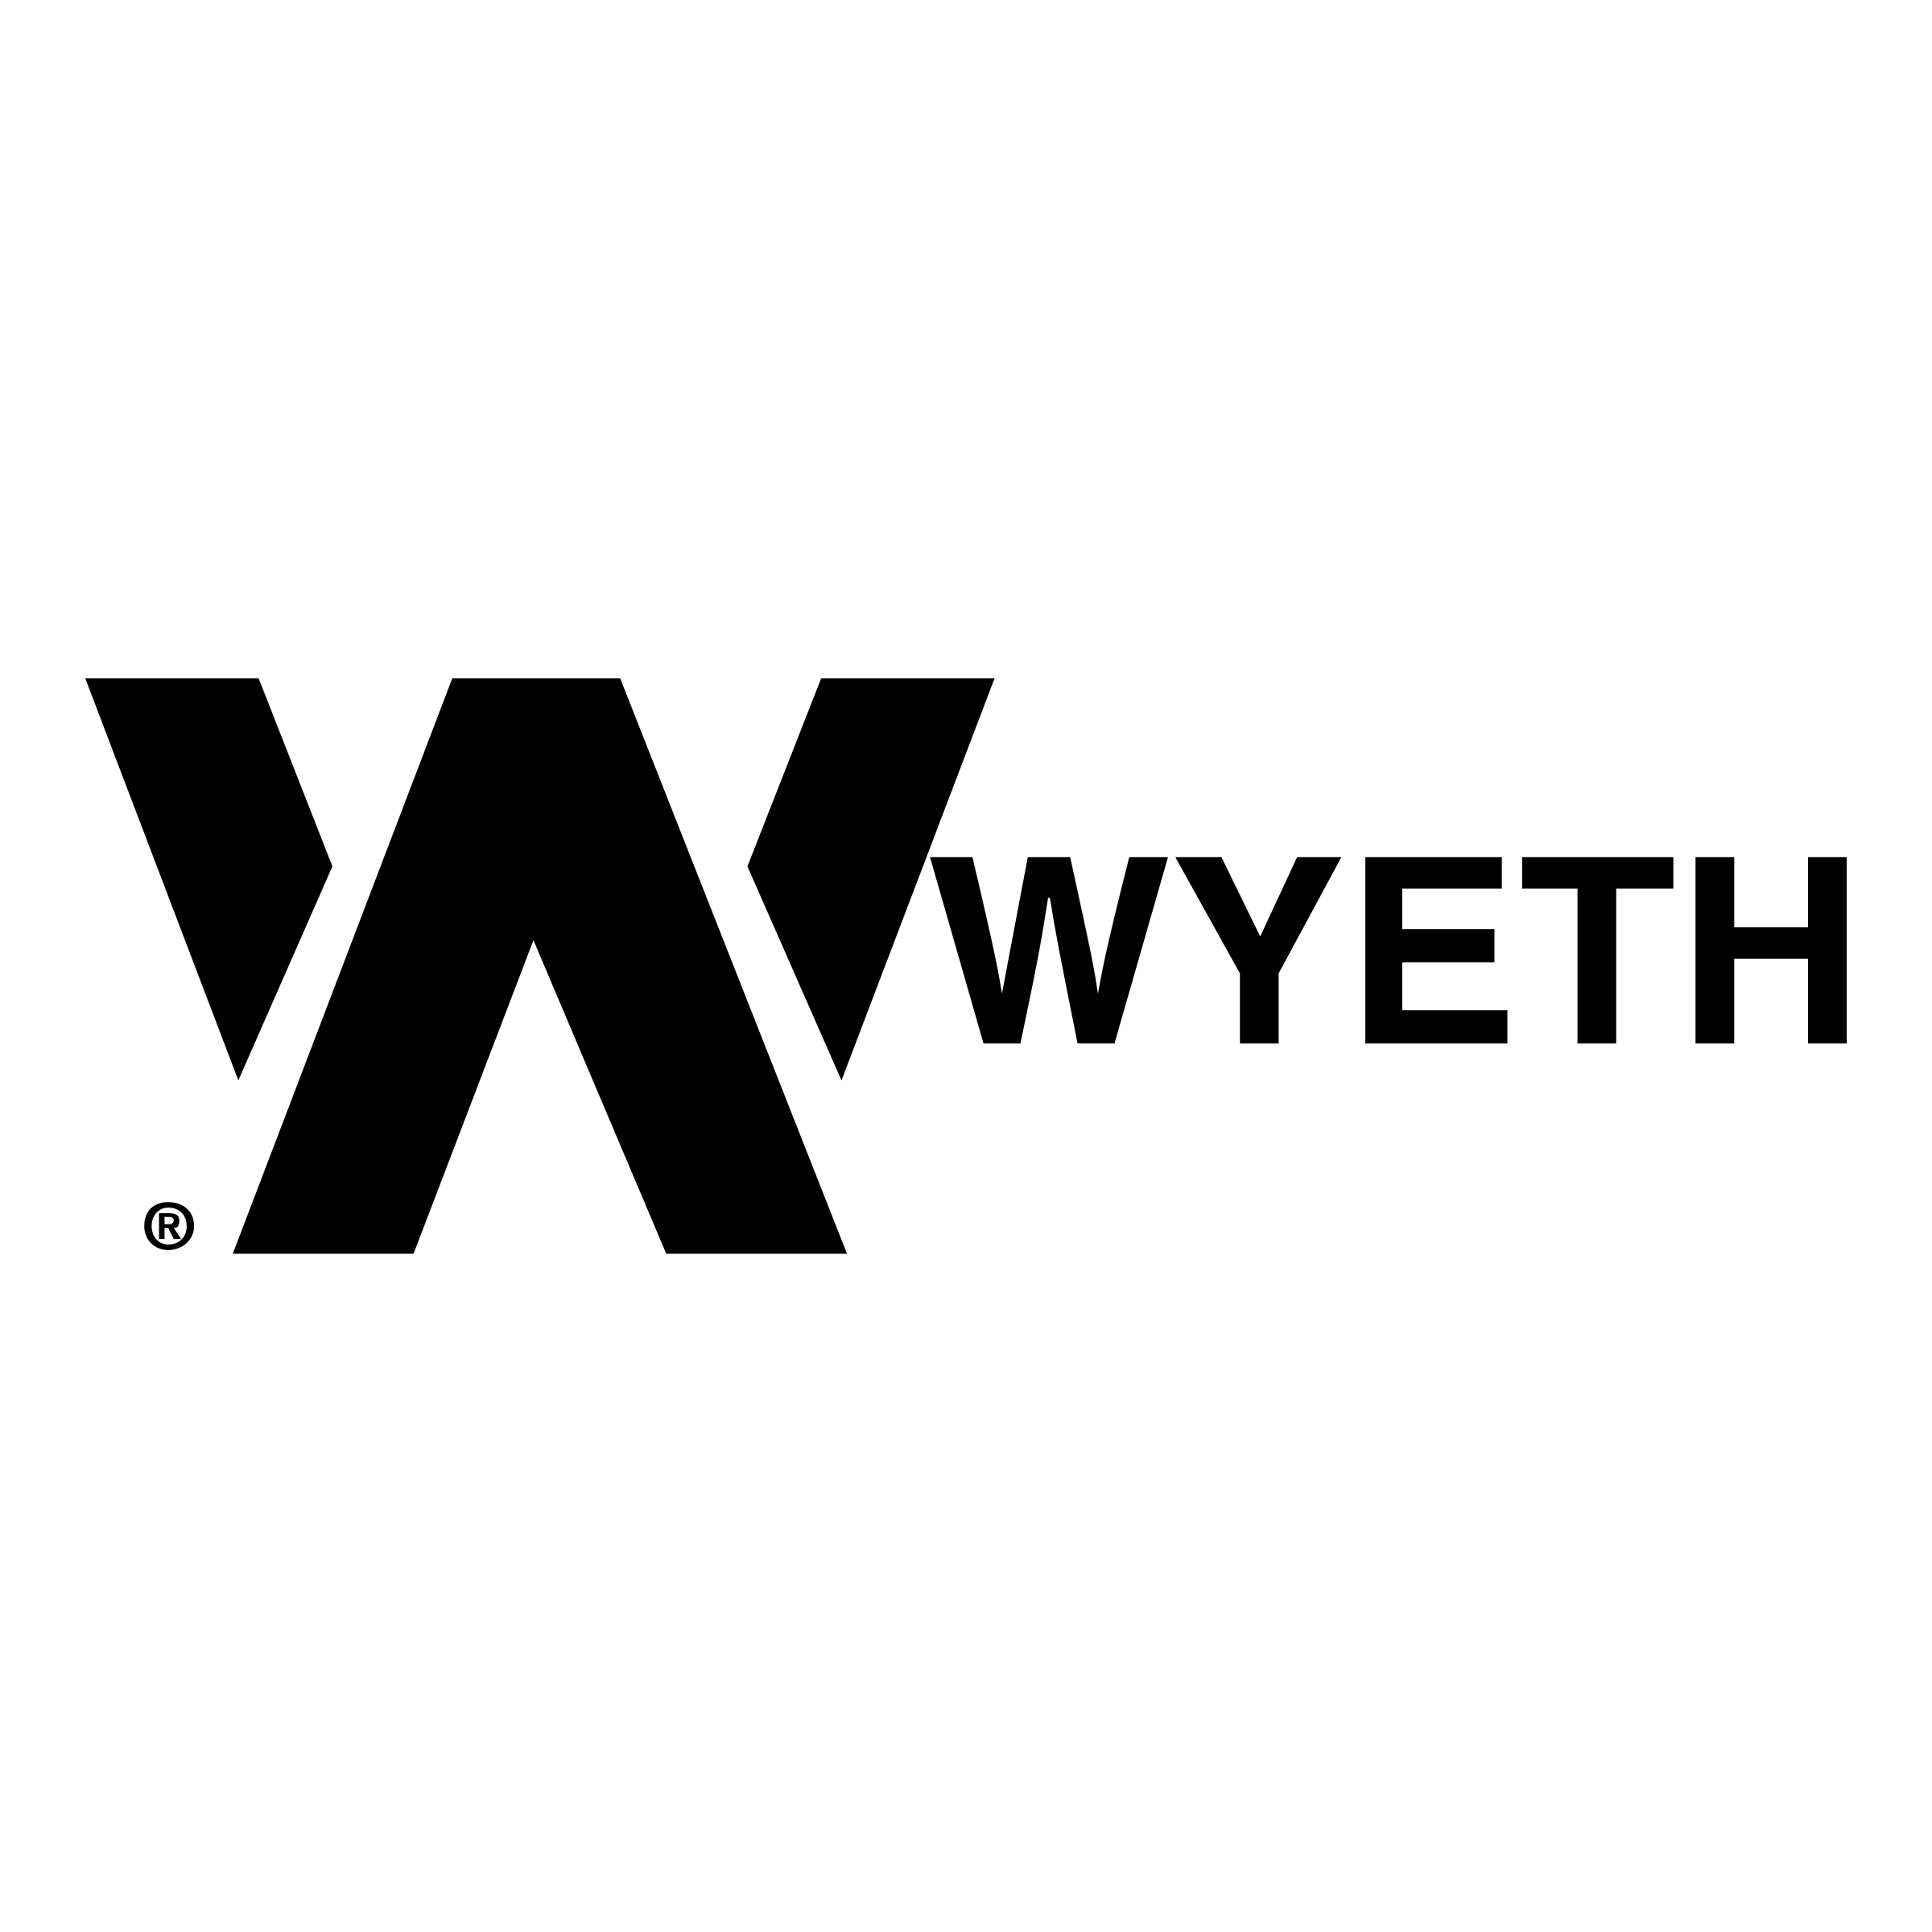 Wyeth Logo - Wyeth Logo PNG Transparent & SVG Vector